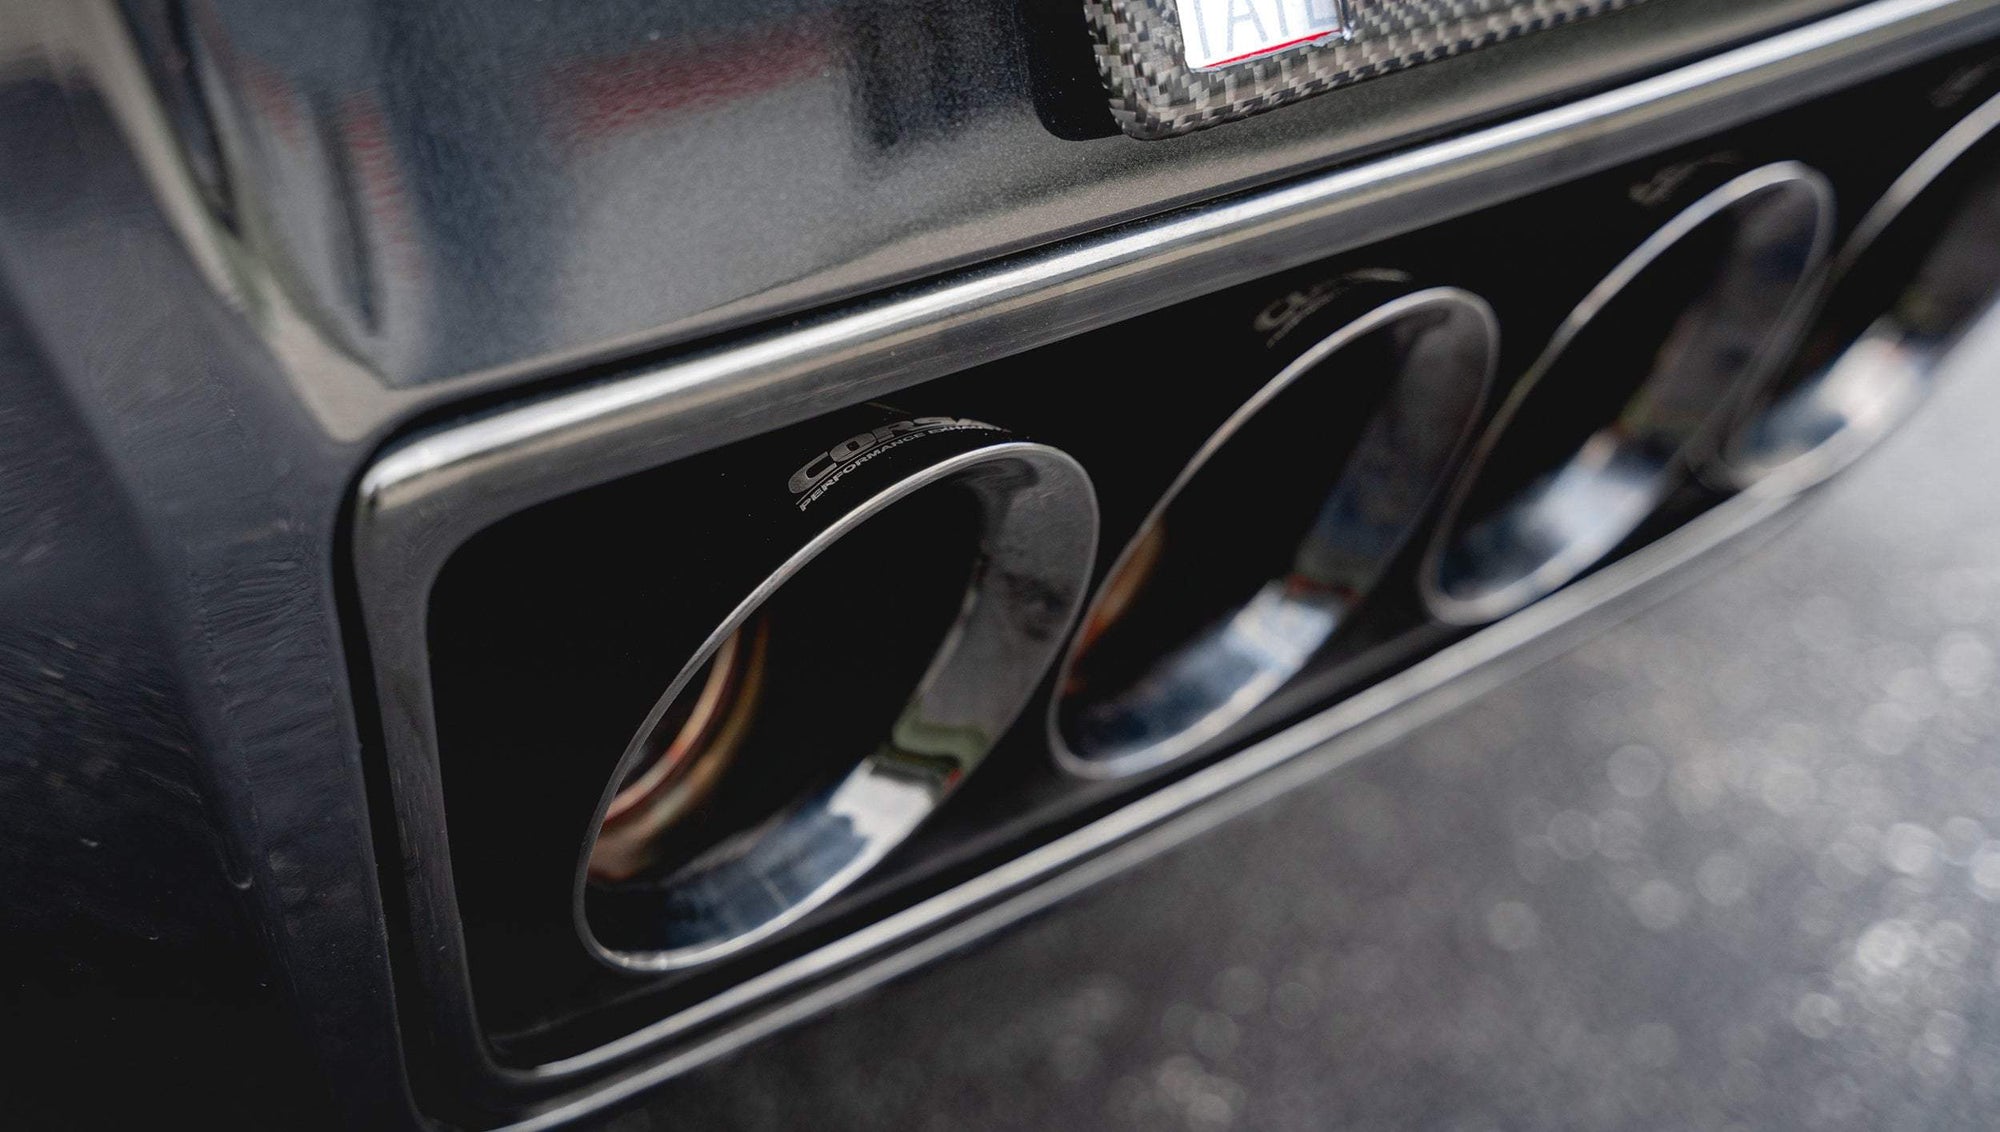 CORSA PERFORMANCE Active Valve (NPP) Exhaust 2015-2019 C7 Chevrolet Corvette 2.75" Dual Rear Exit Active Valve, Axle-Back, Exhaust System with Quad 4.5" Tips (14777) Sport to Xtreme Sound Level